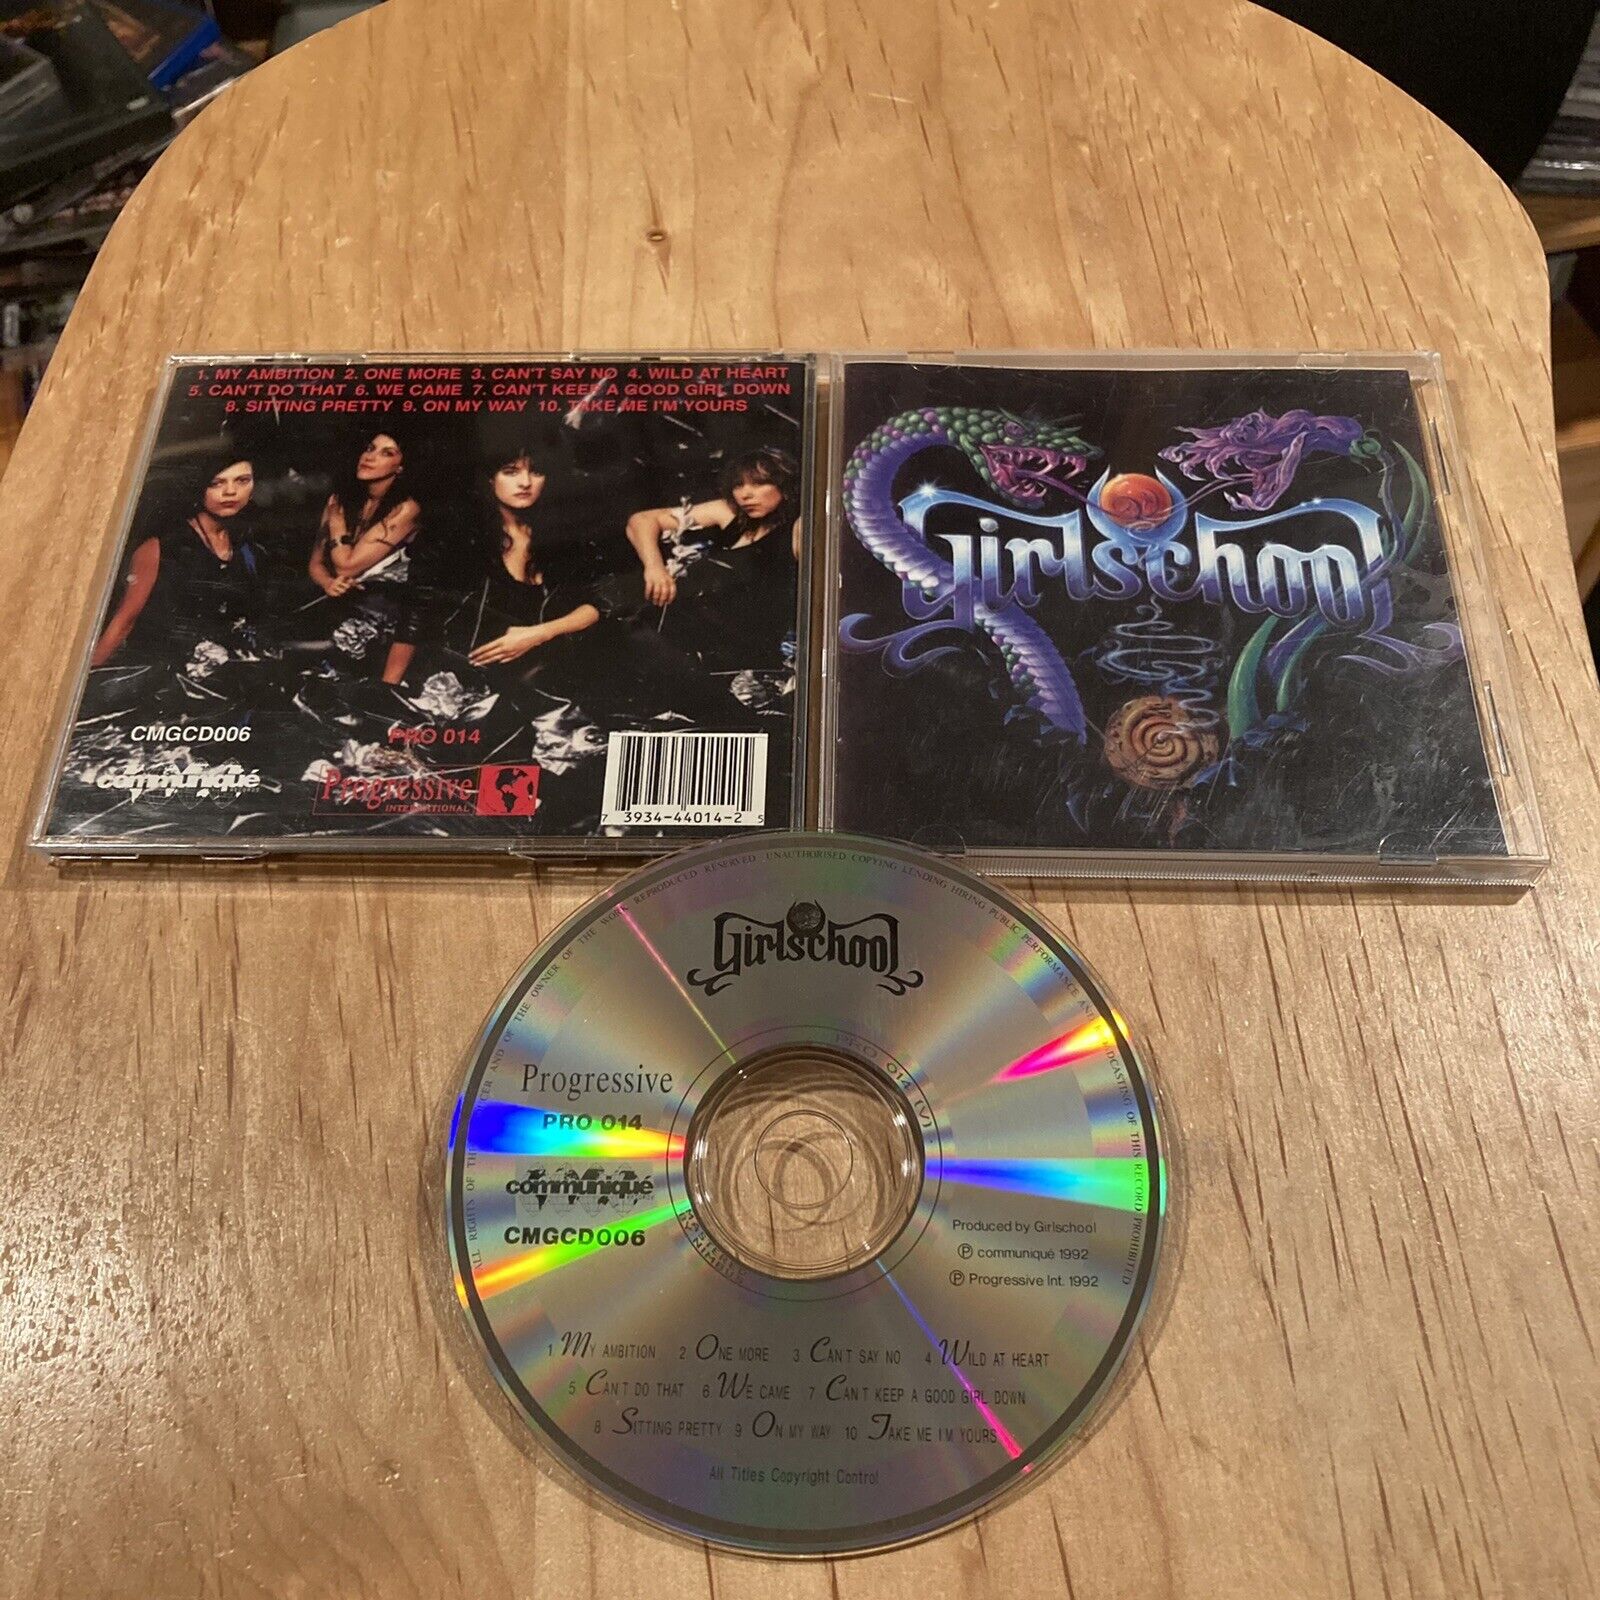 Girlschool s/t 1992 CD 1st UK press motorhead doro saxon rock goddess bitch